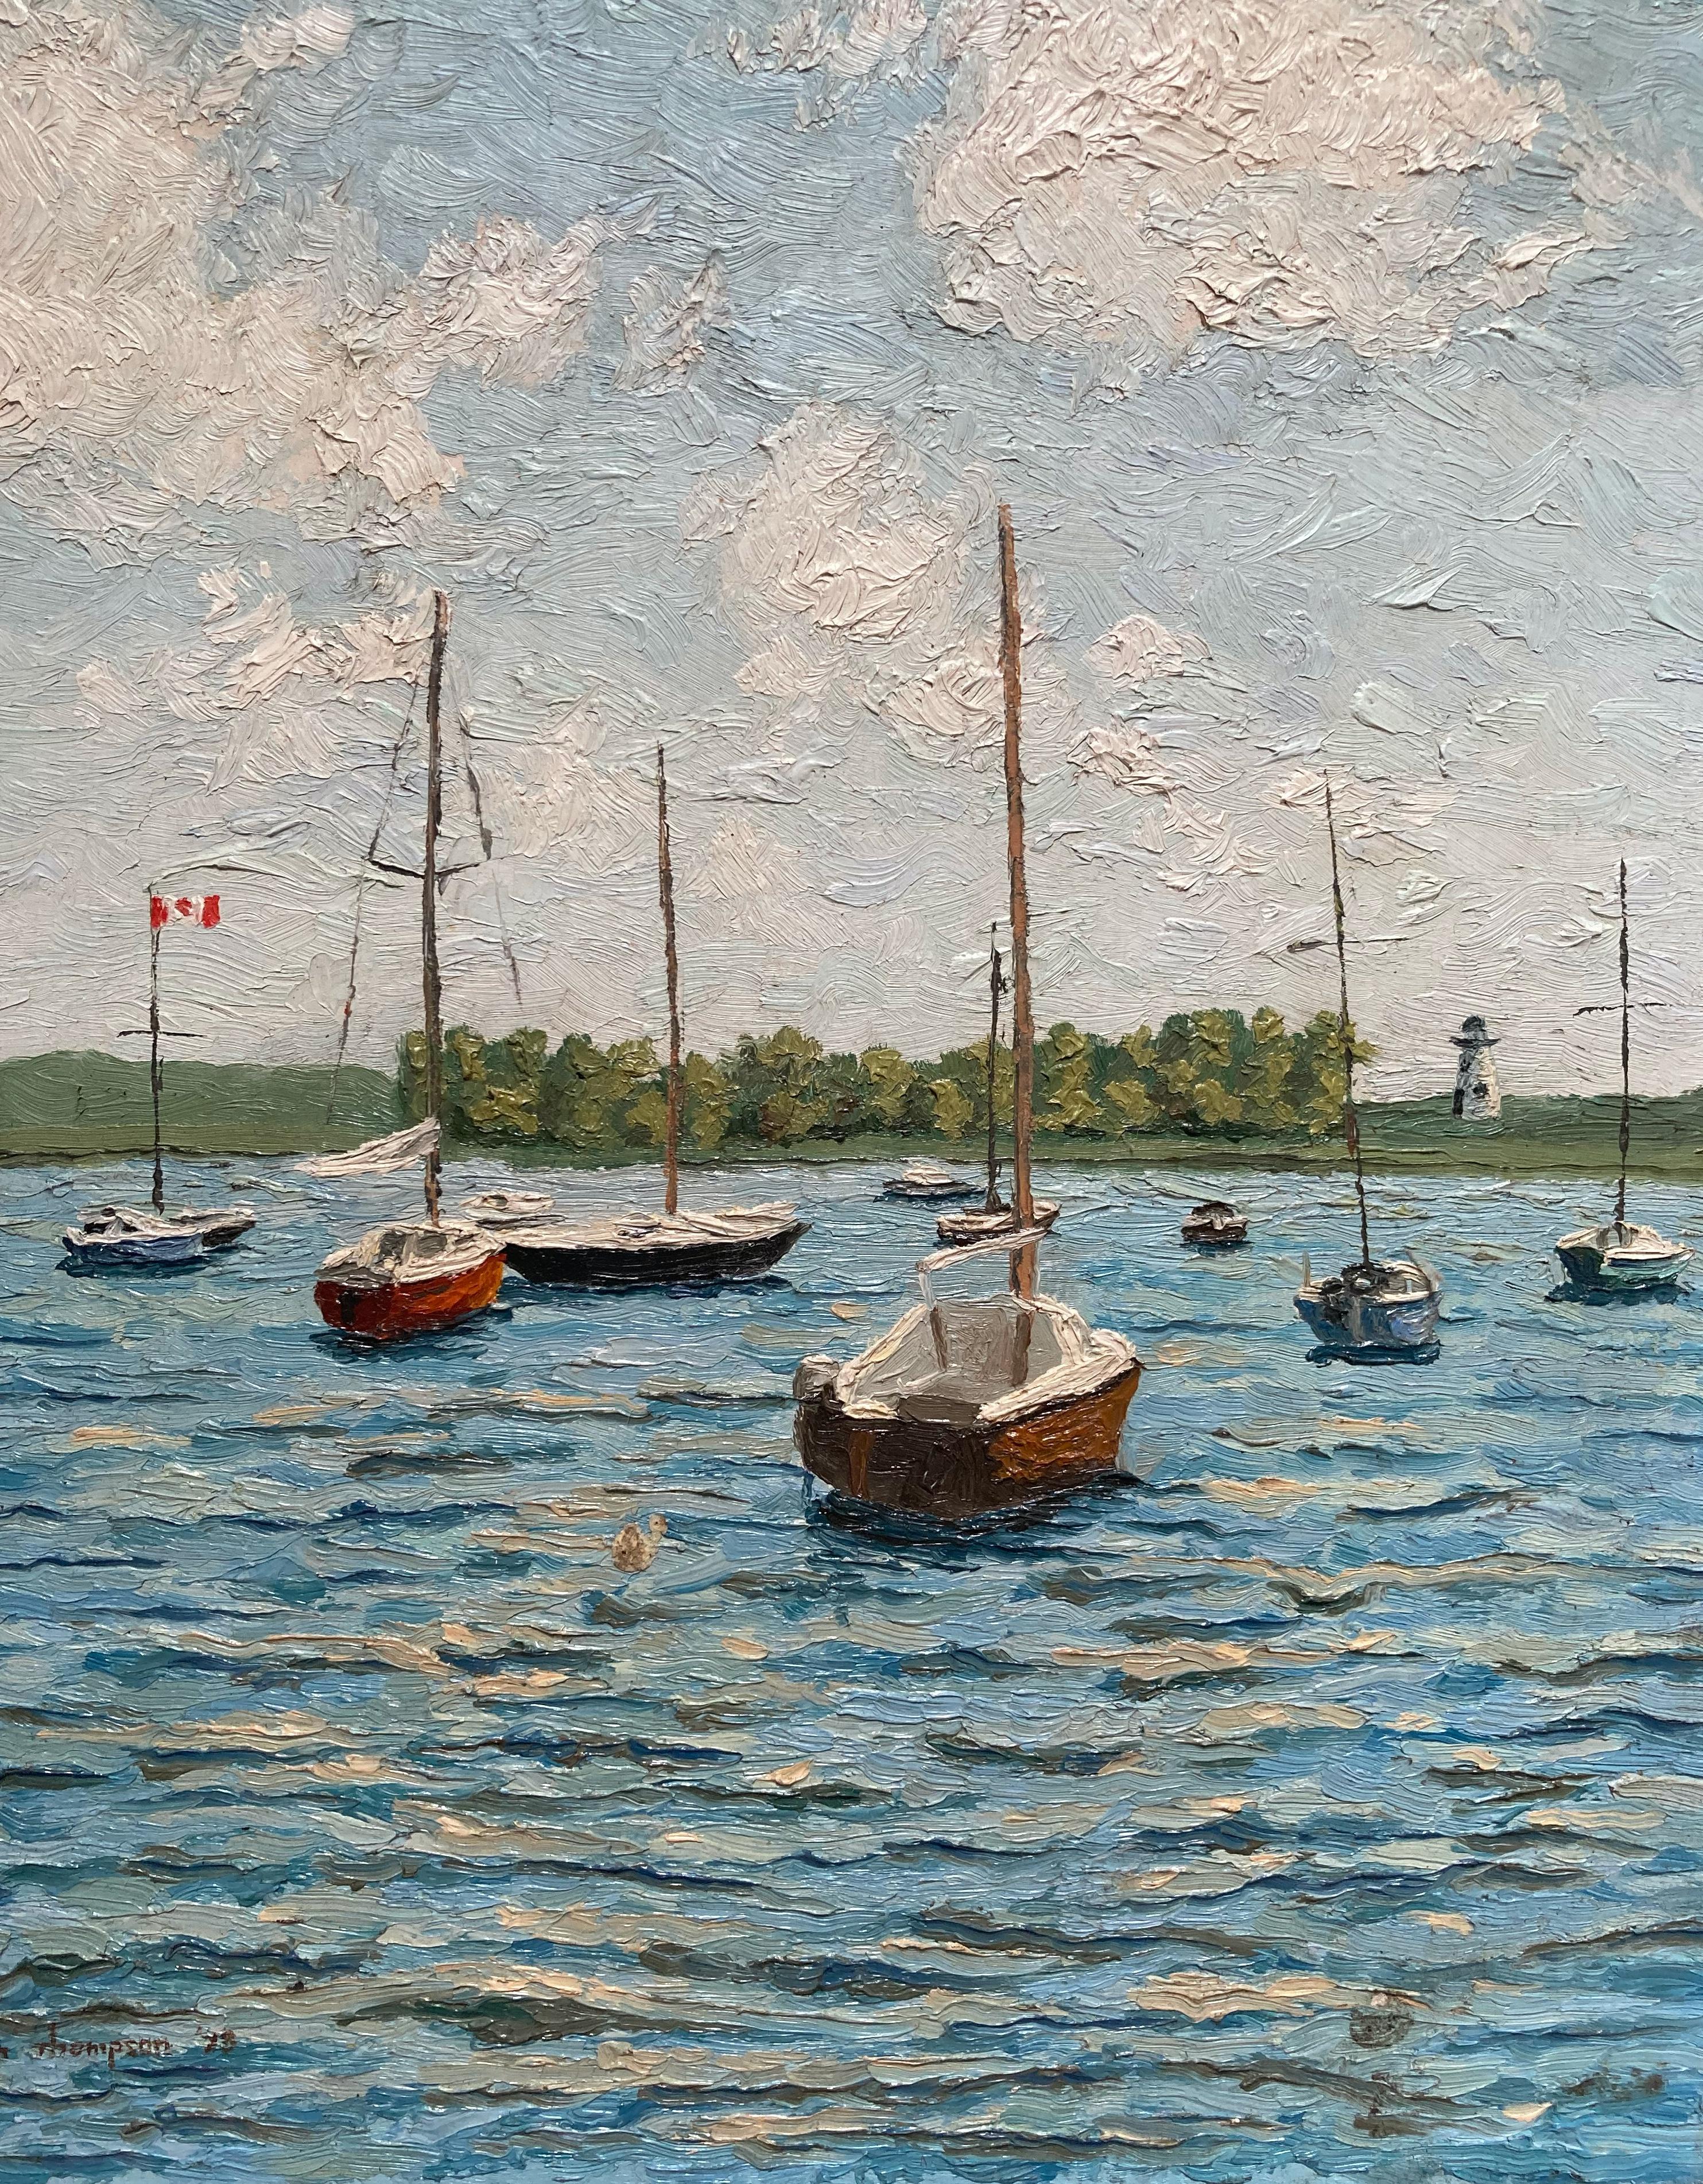 Sailboats at Anchor - Painting by Sharon Thompson